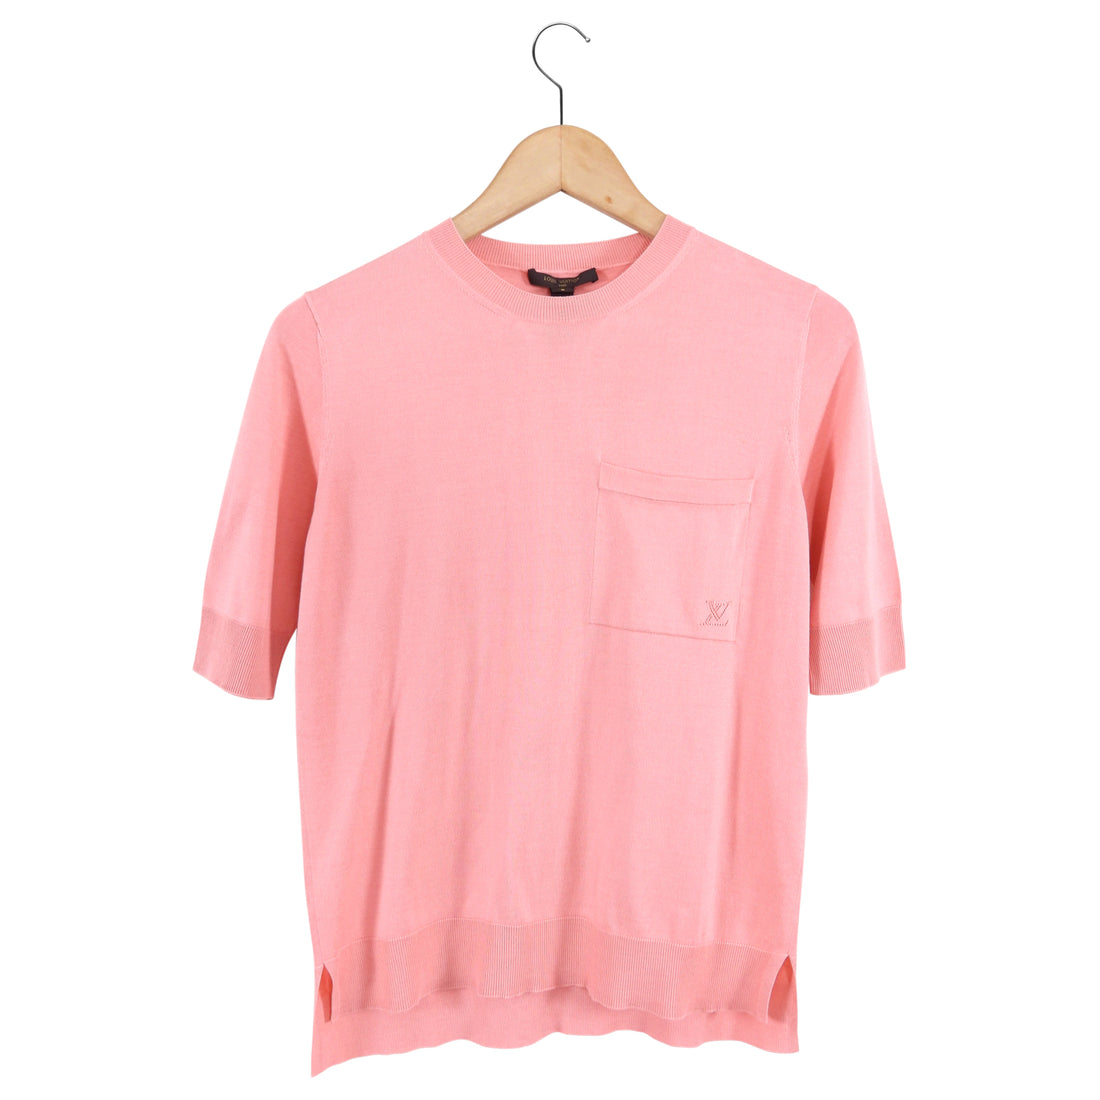 Louis Vuitton Salmon Pink Knit Short Sleeve Sweater Top - S (4/6)